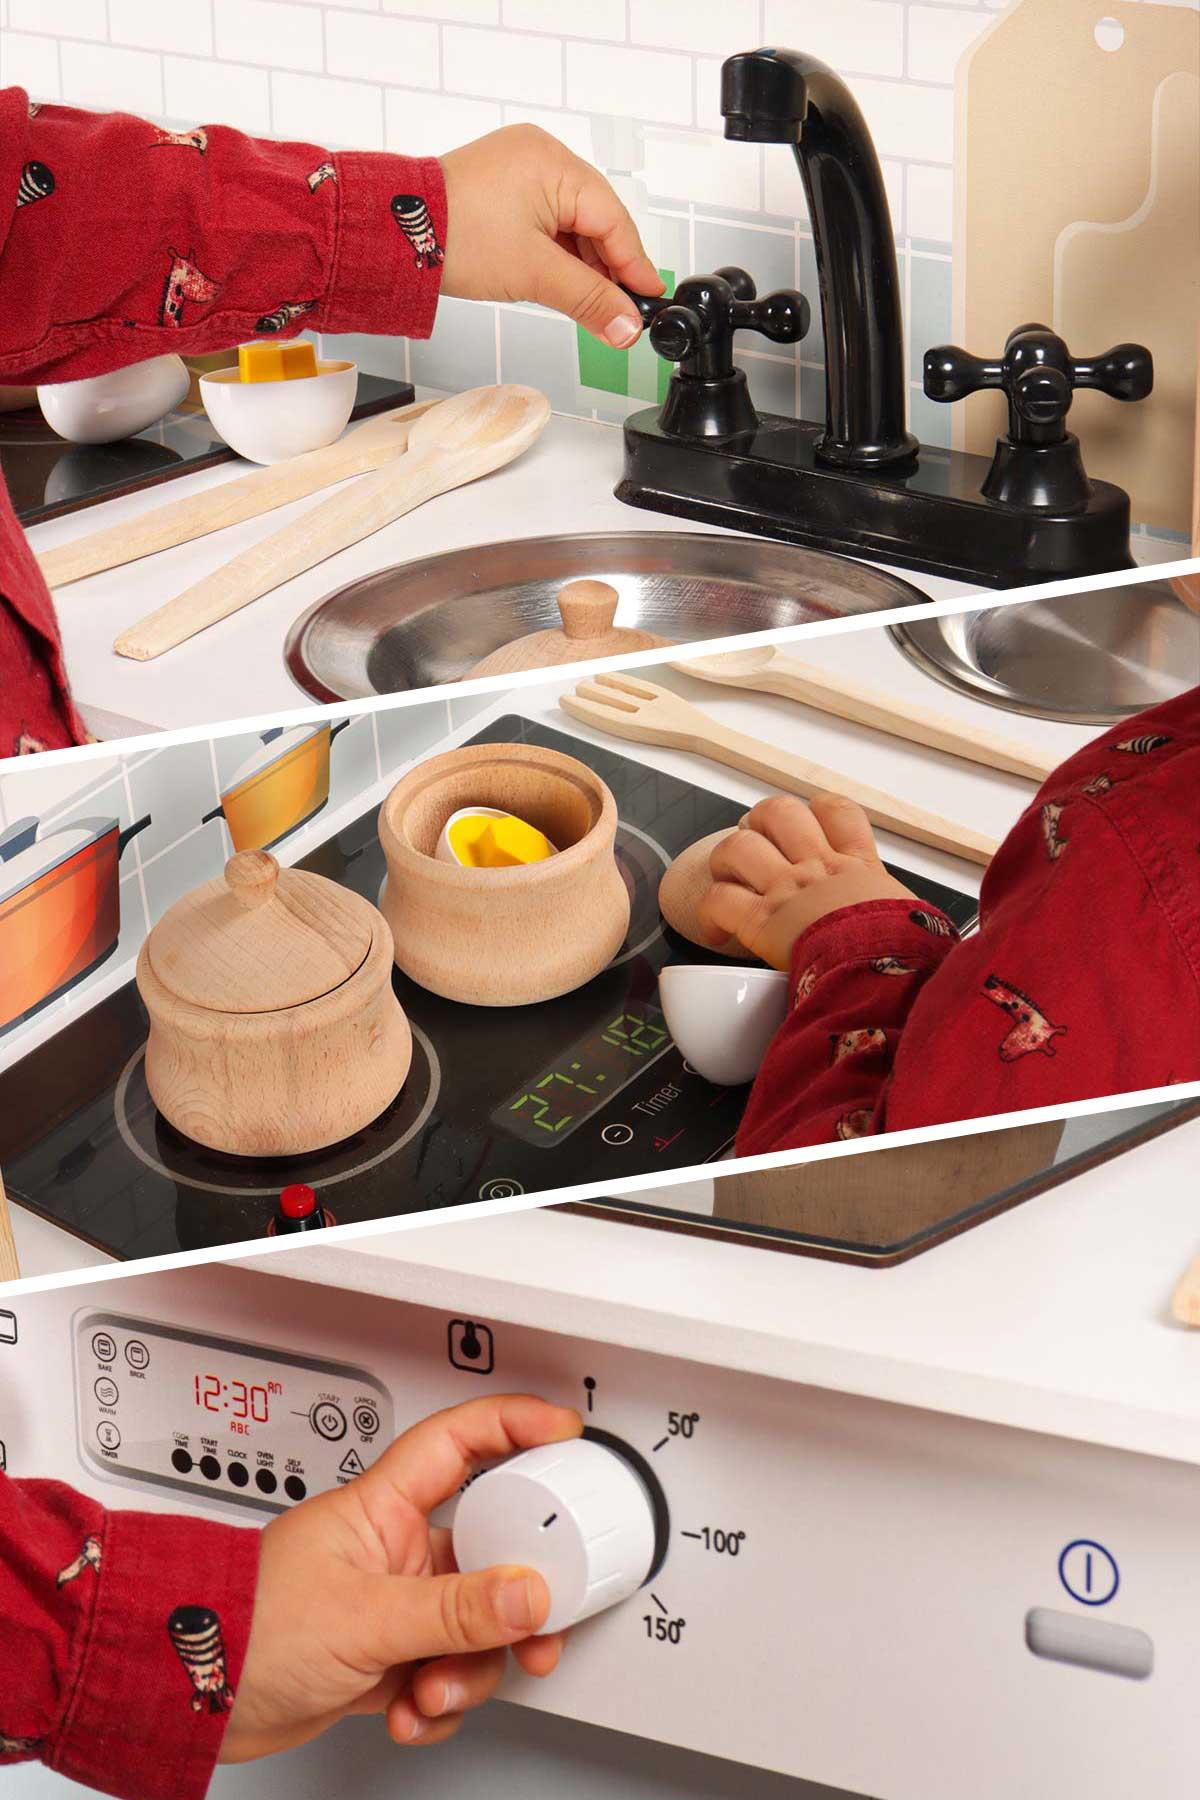 gri kulplu egitici ahsap montessori mutfak oyuncak seti hediye cocuk halisi dbk102 121778.jpg